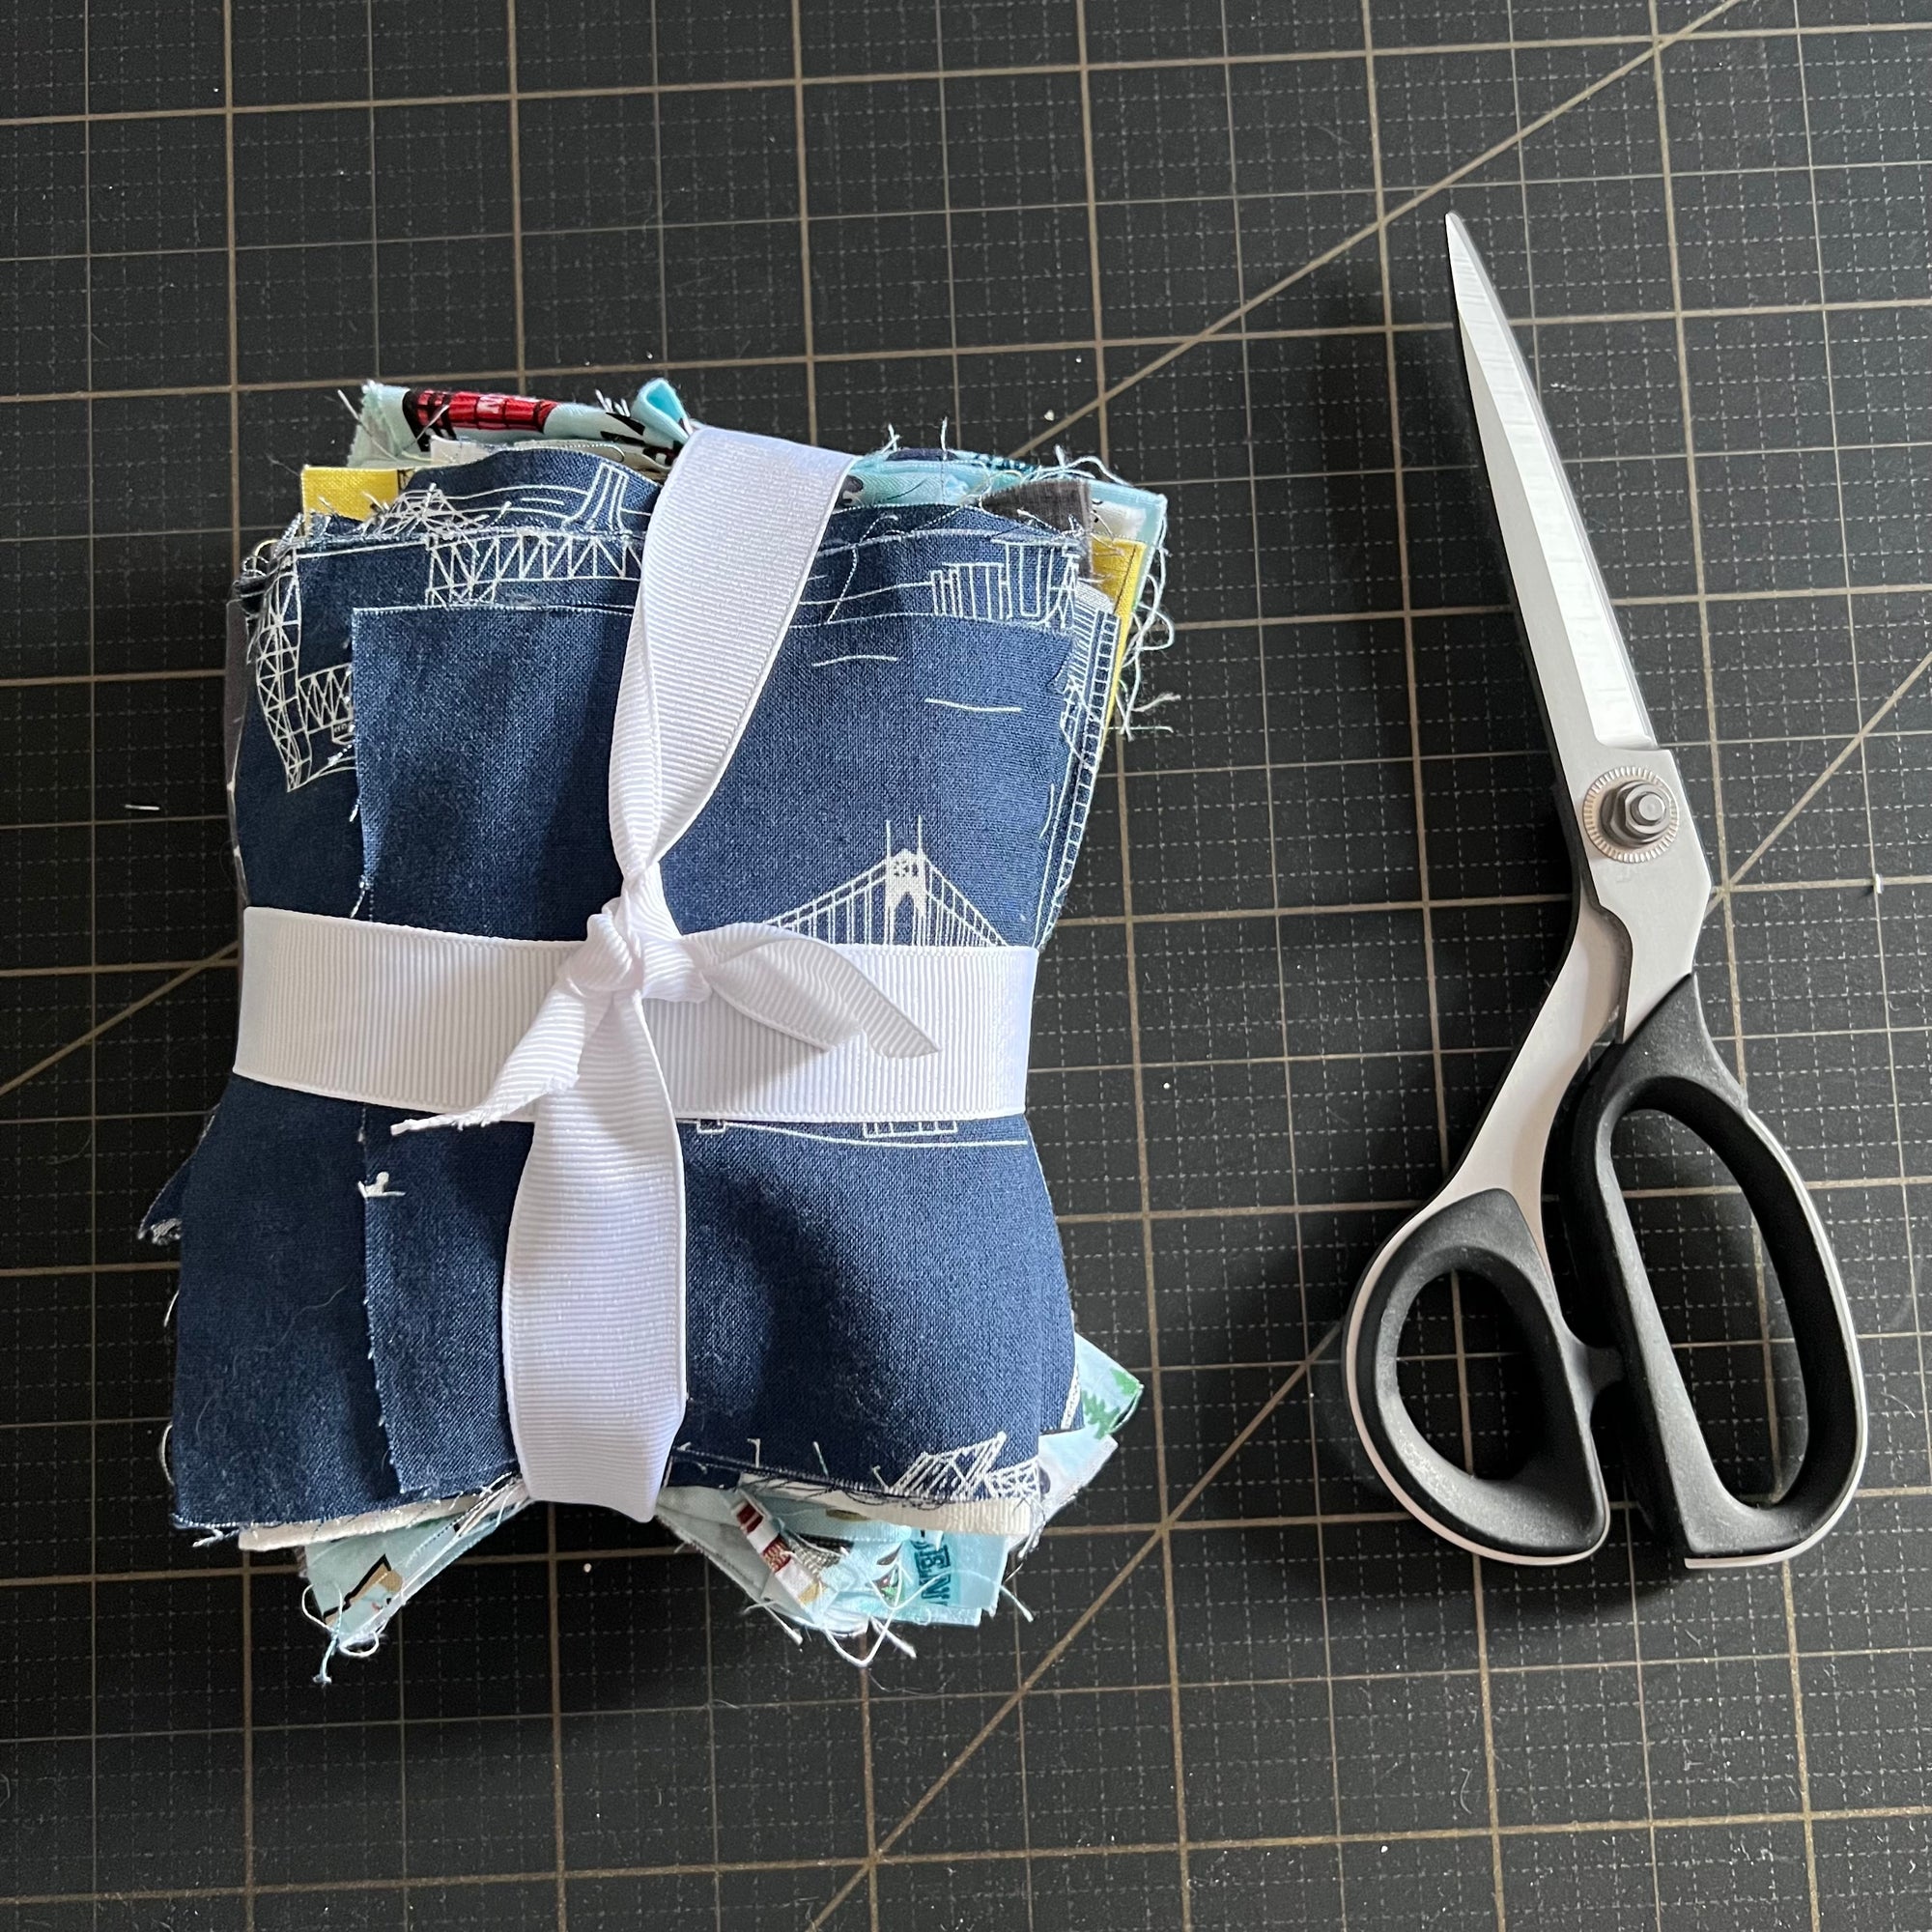 Oregon Fabric Scrap Bundle No. 2 - 10.8 oz.